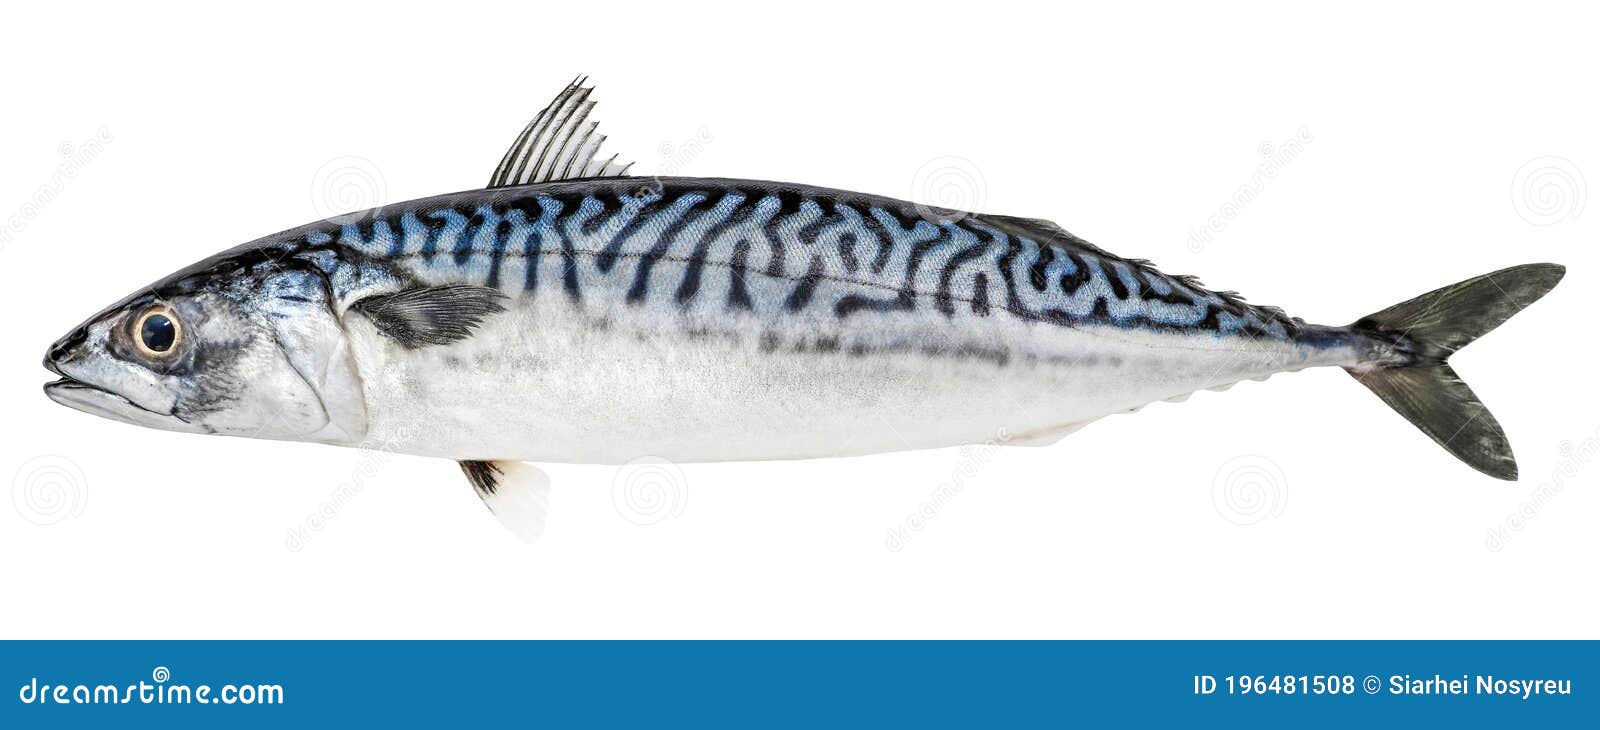 atlantic mackerel fish  on white background